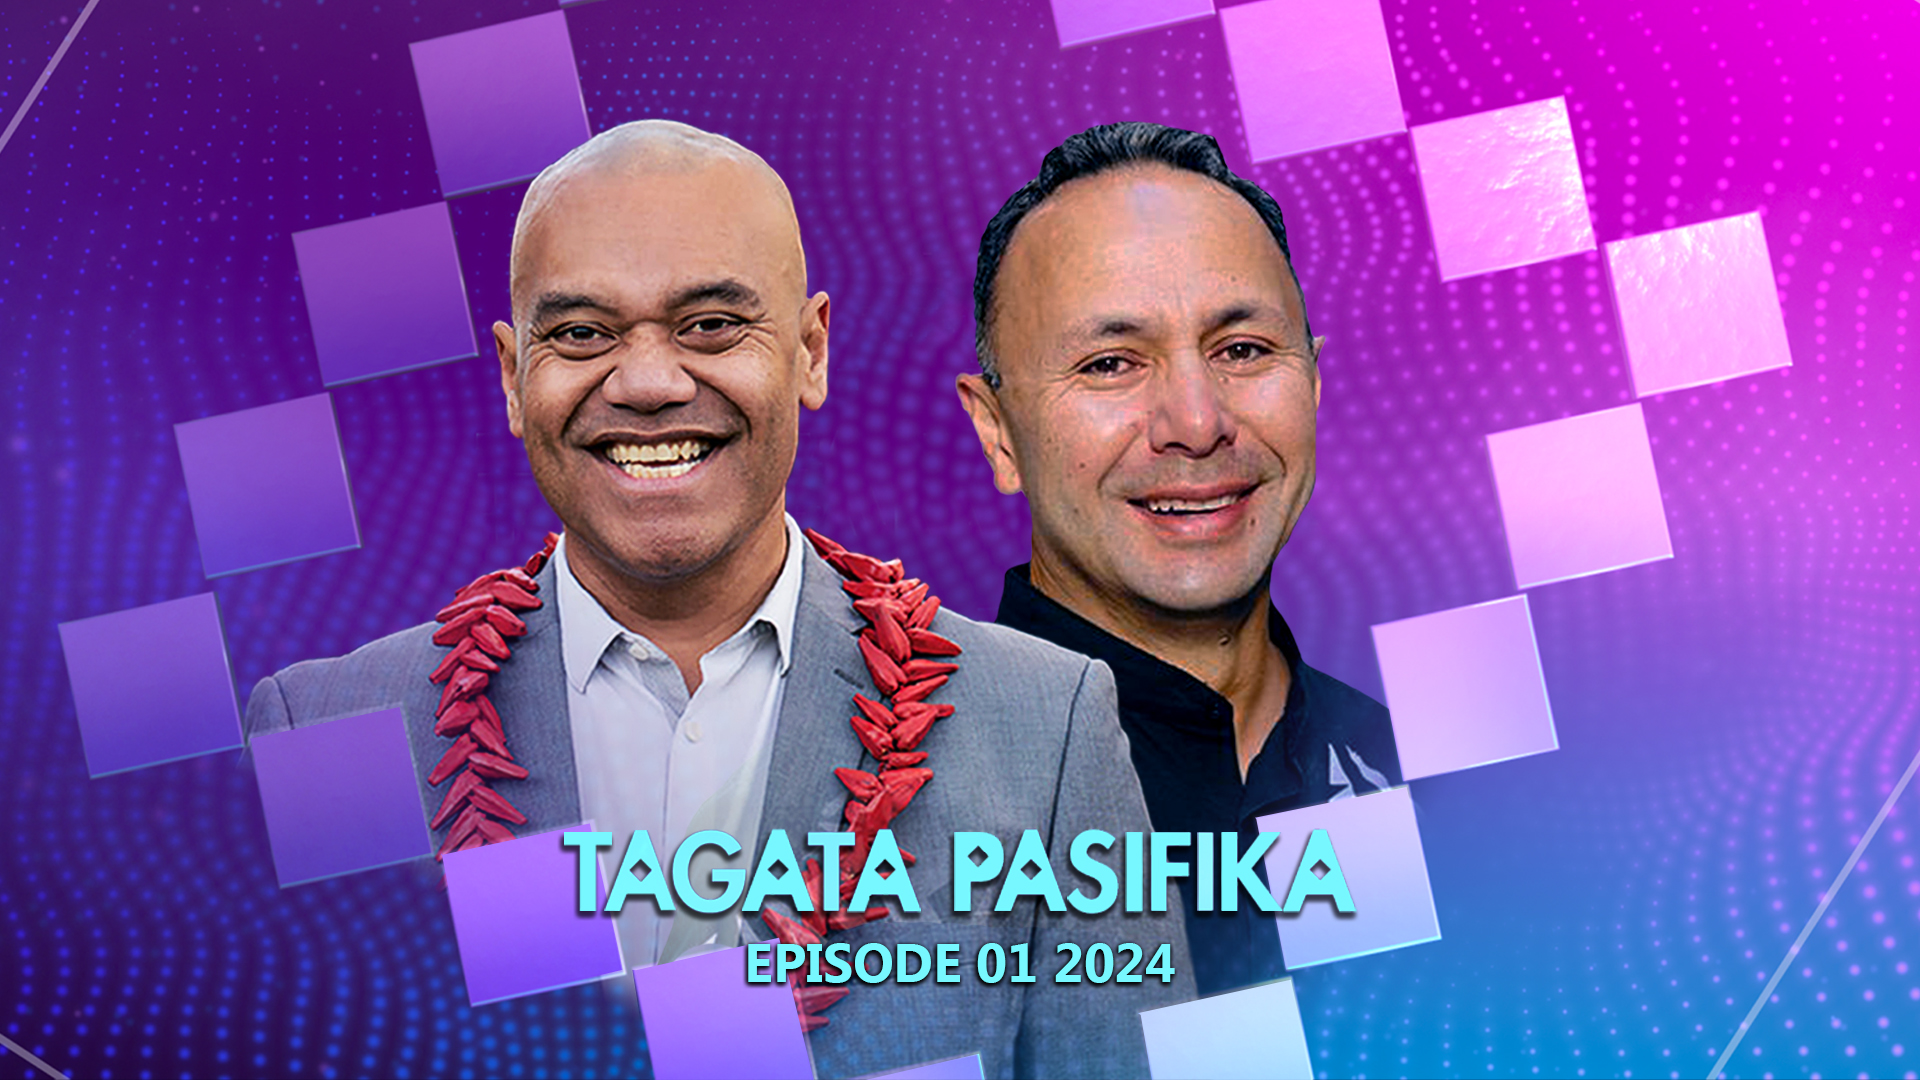 WATCH: Tagata Pasifika 2024 Episode 1